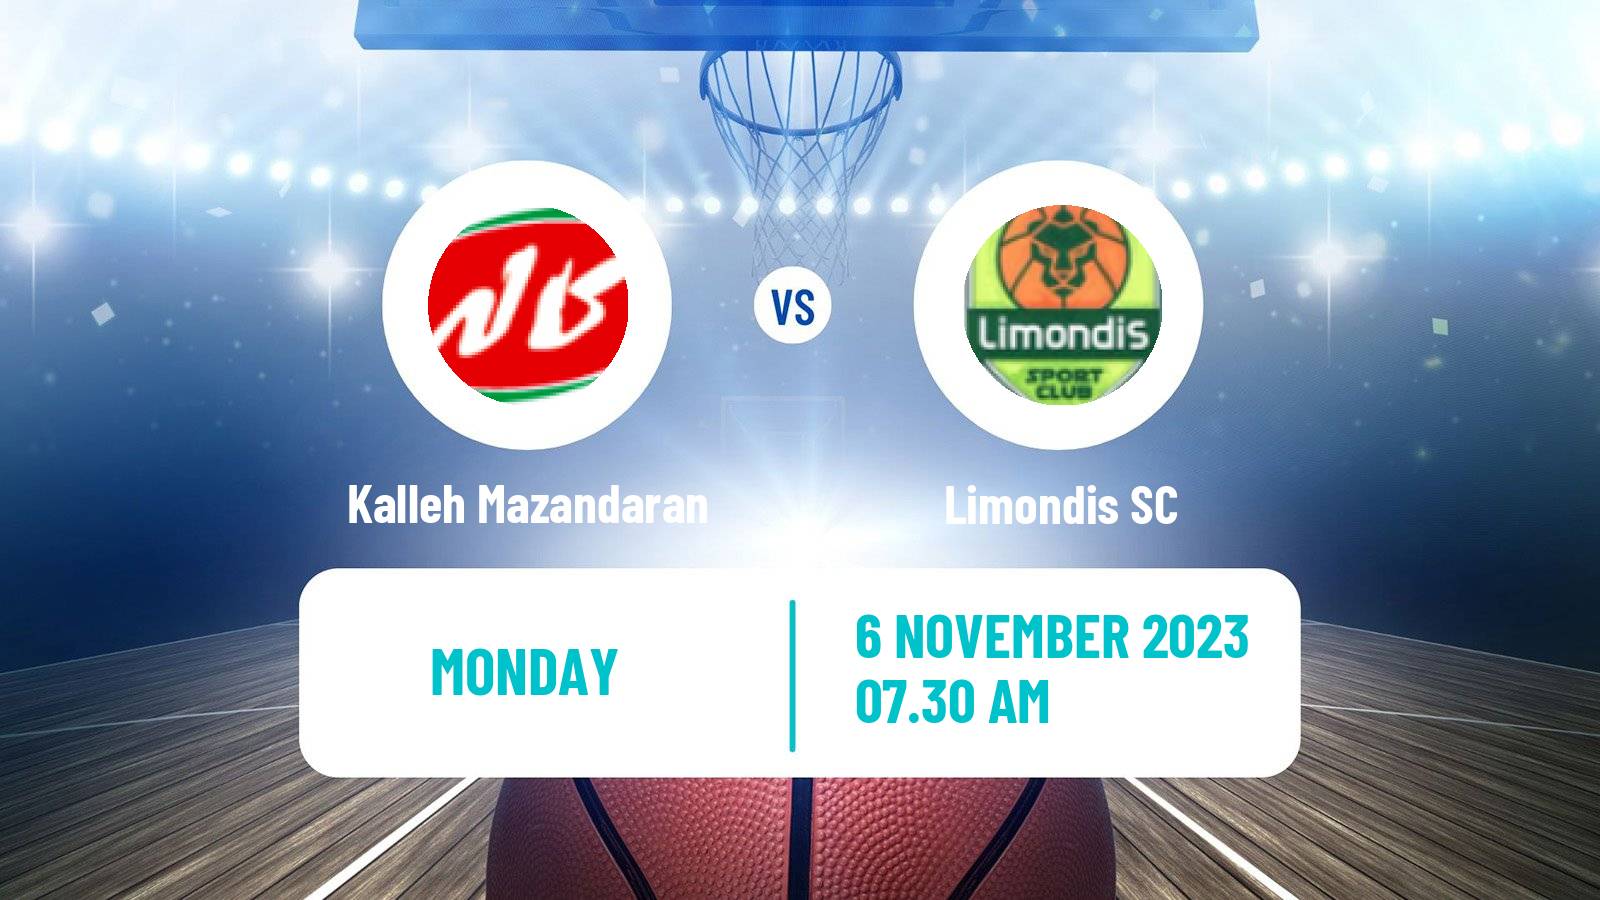 Basketball Iran Super League Basketball Kalleh Mazandaran - Limondis